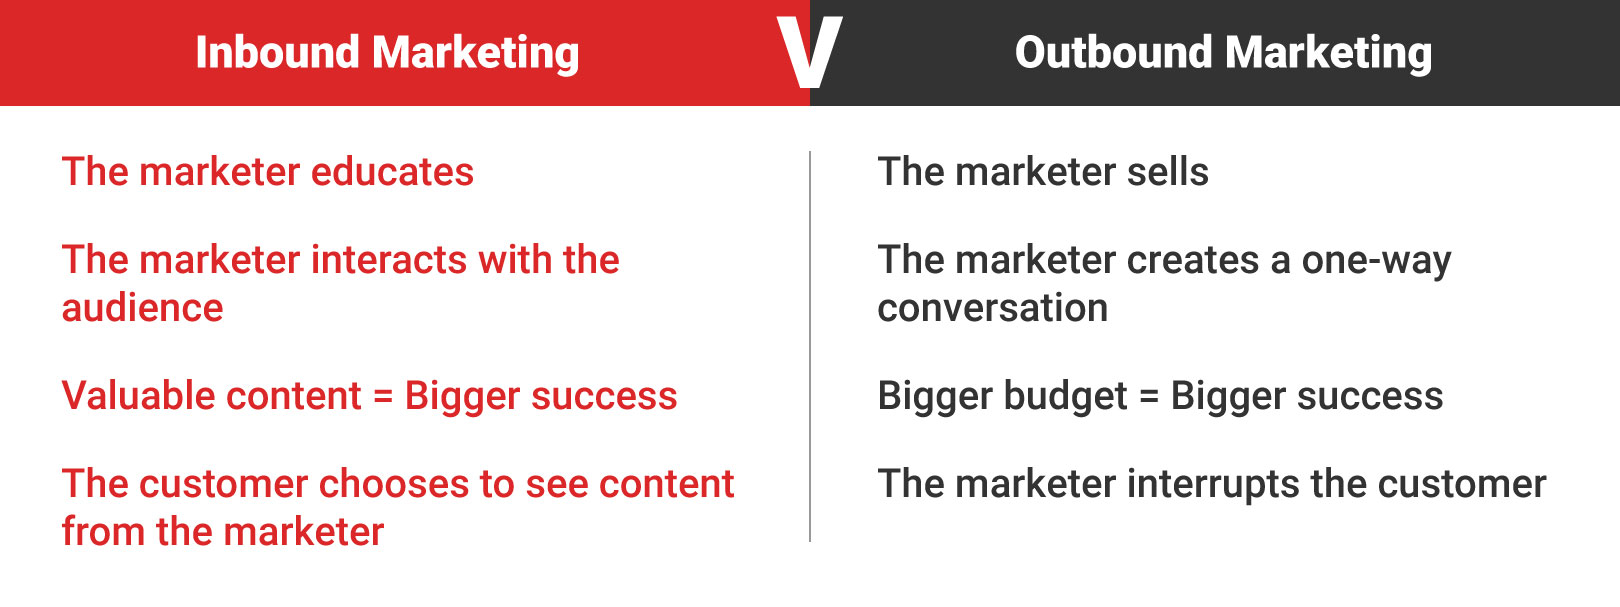 Inbound vs outbound marketing differences